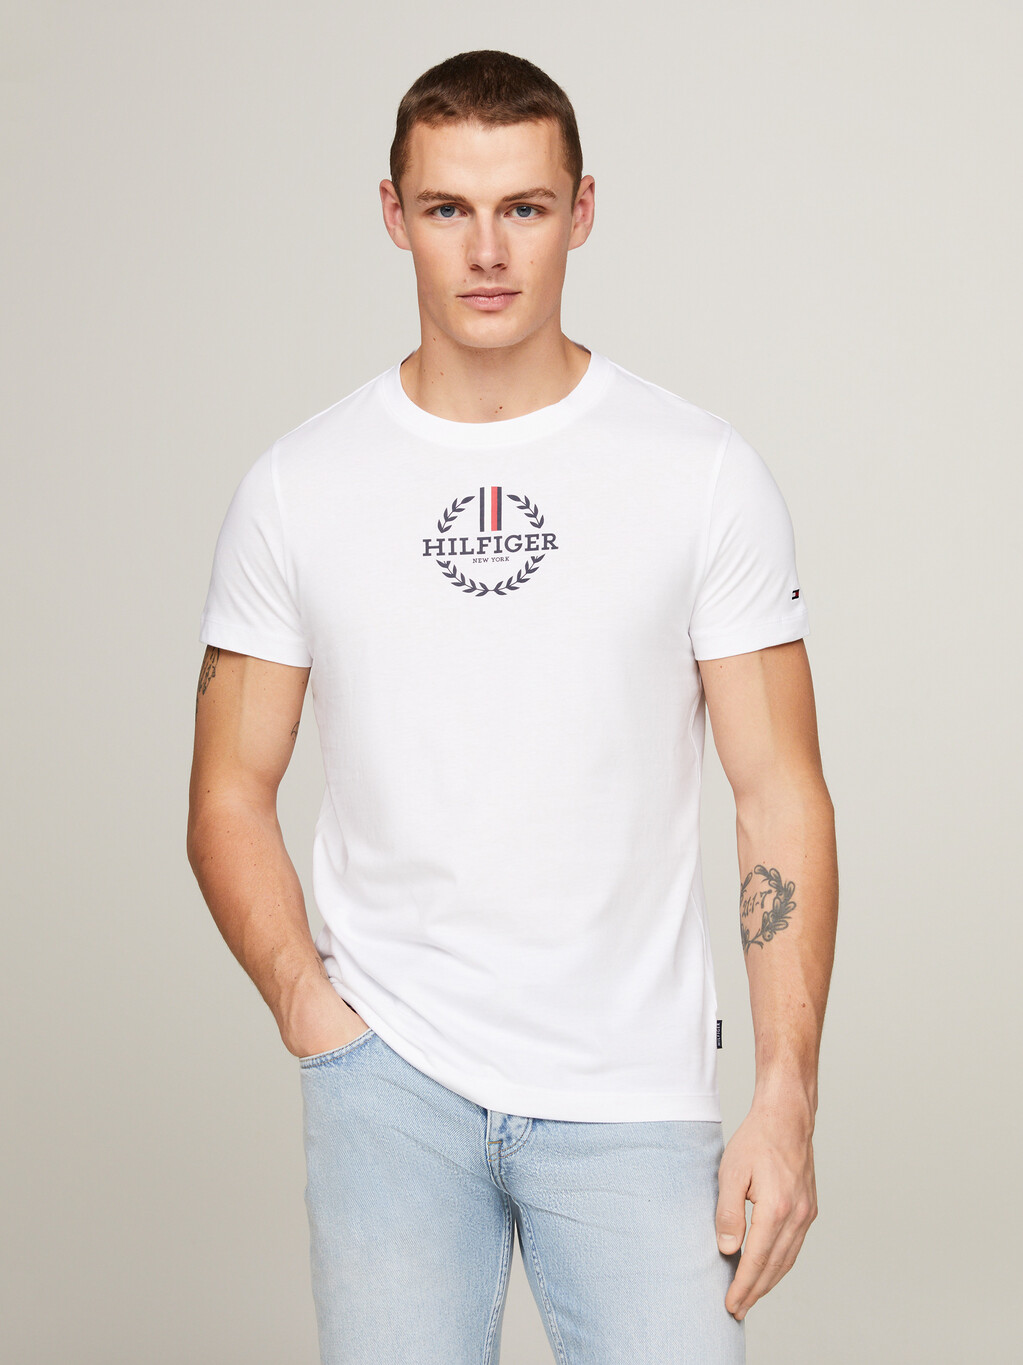 Global Stripe Archive Crest Logo Slim T-Shirt, White, hi-res